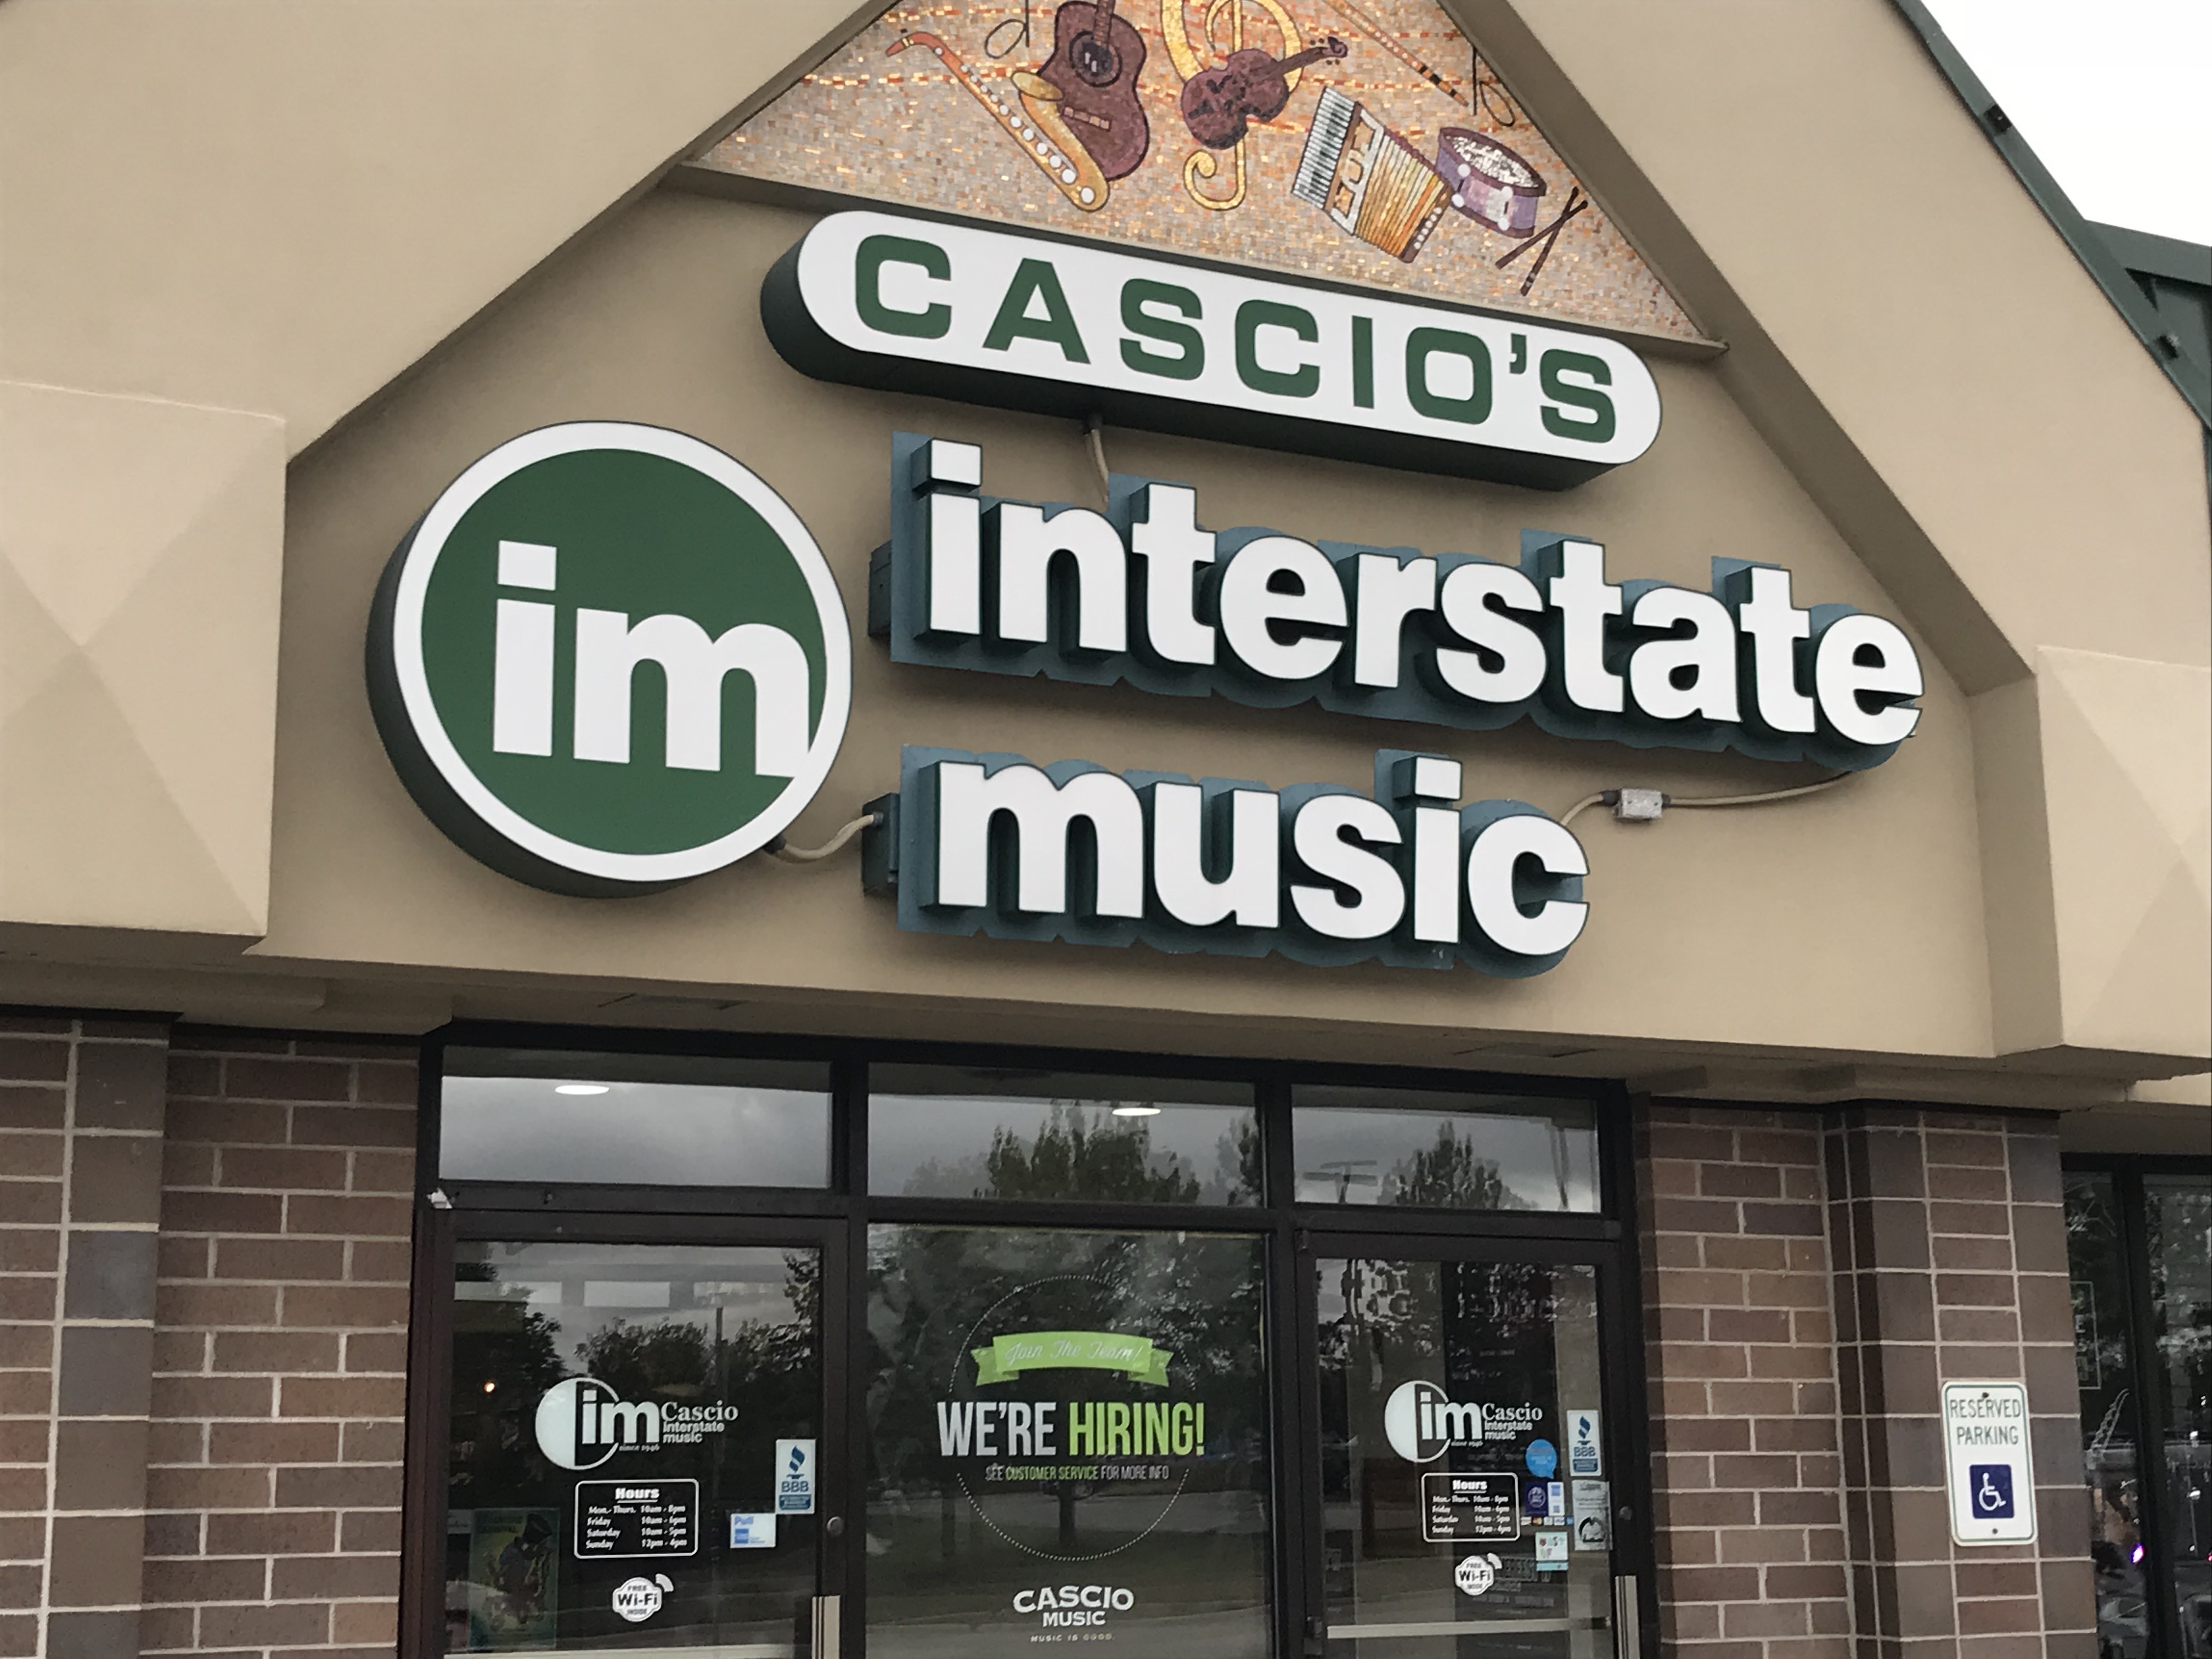 Cascio's Interstate Music